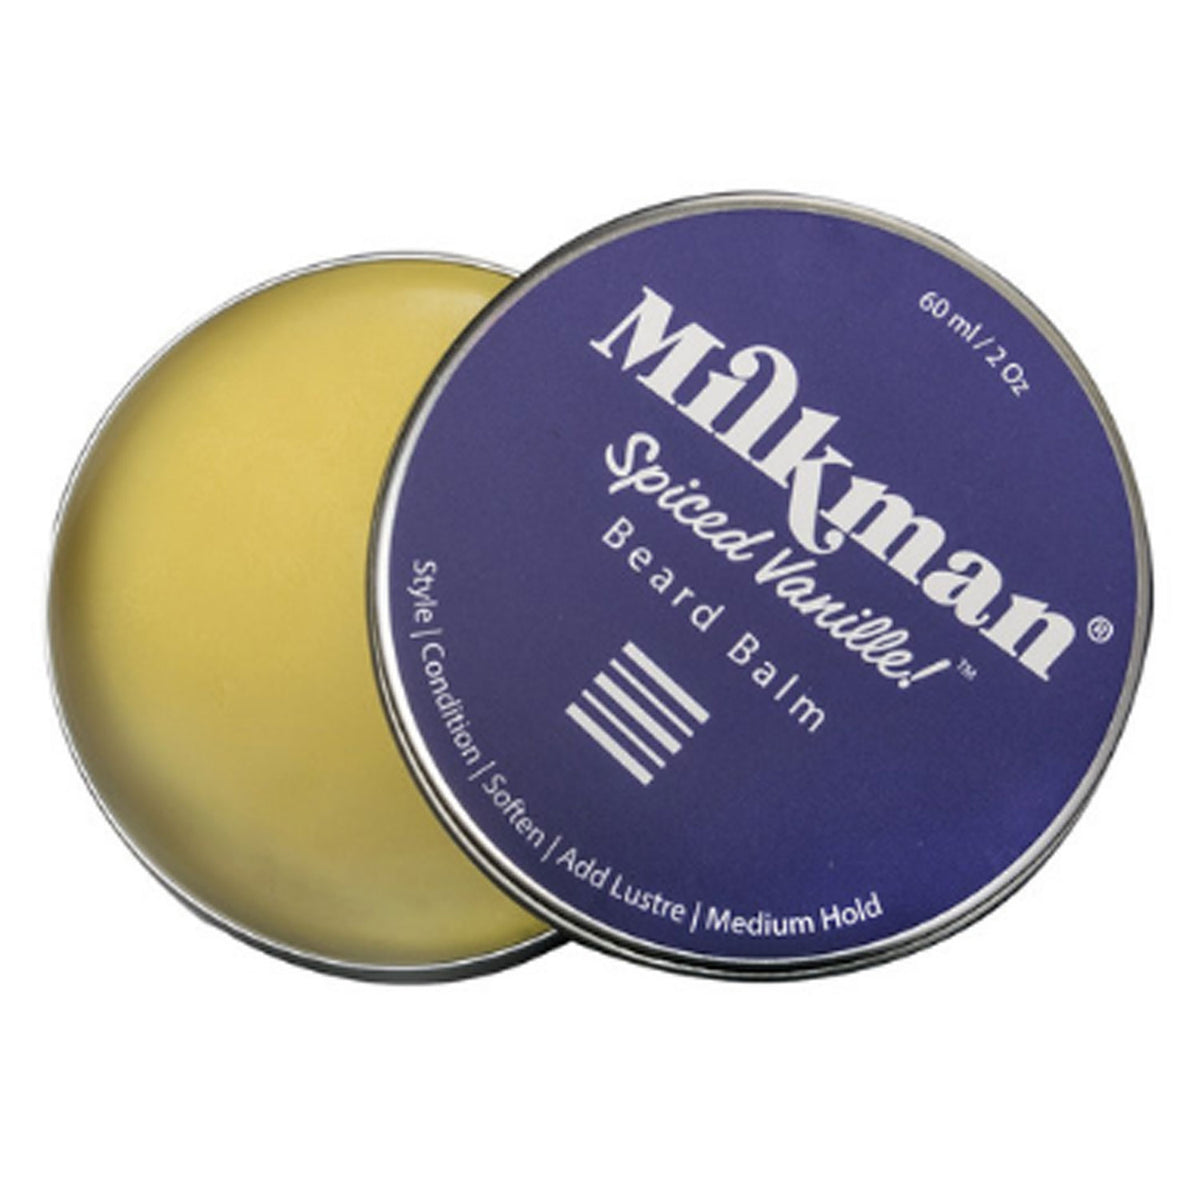 Milkman Grooming Co Spiced Vanille Beard Balm 60ml - Orcadia